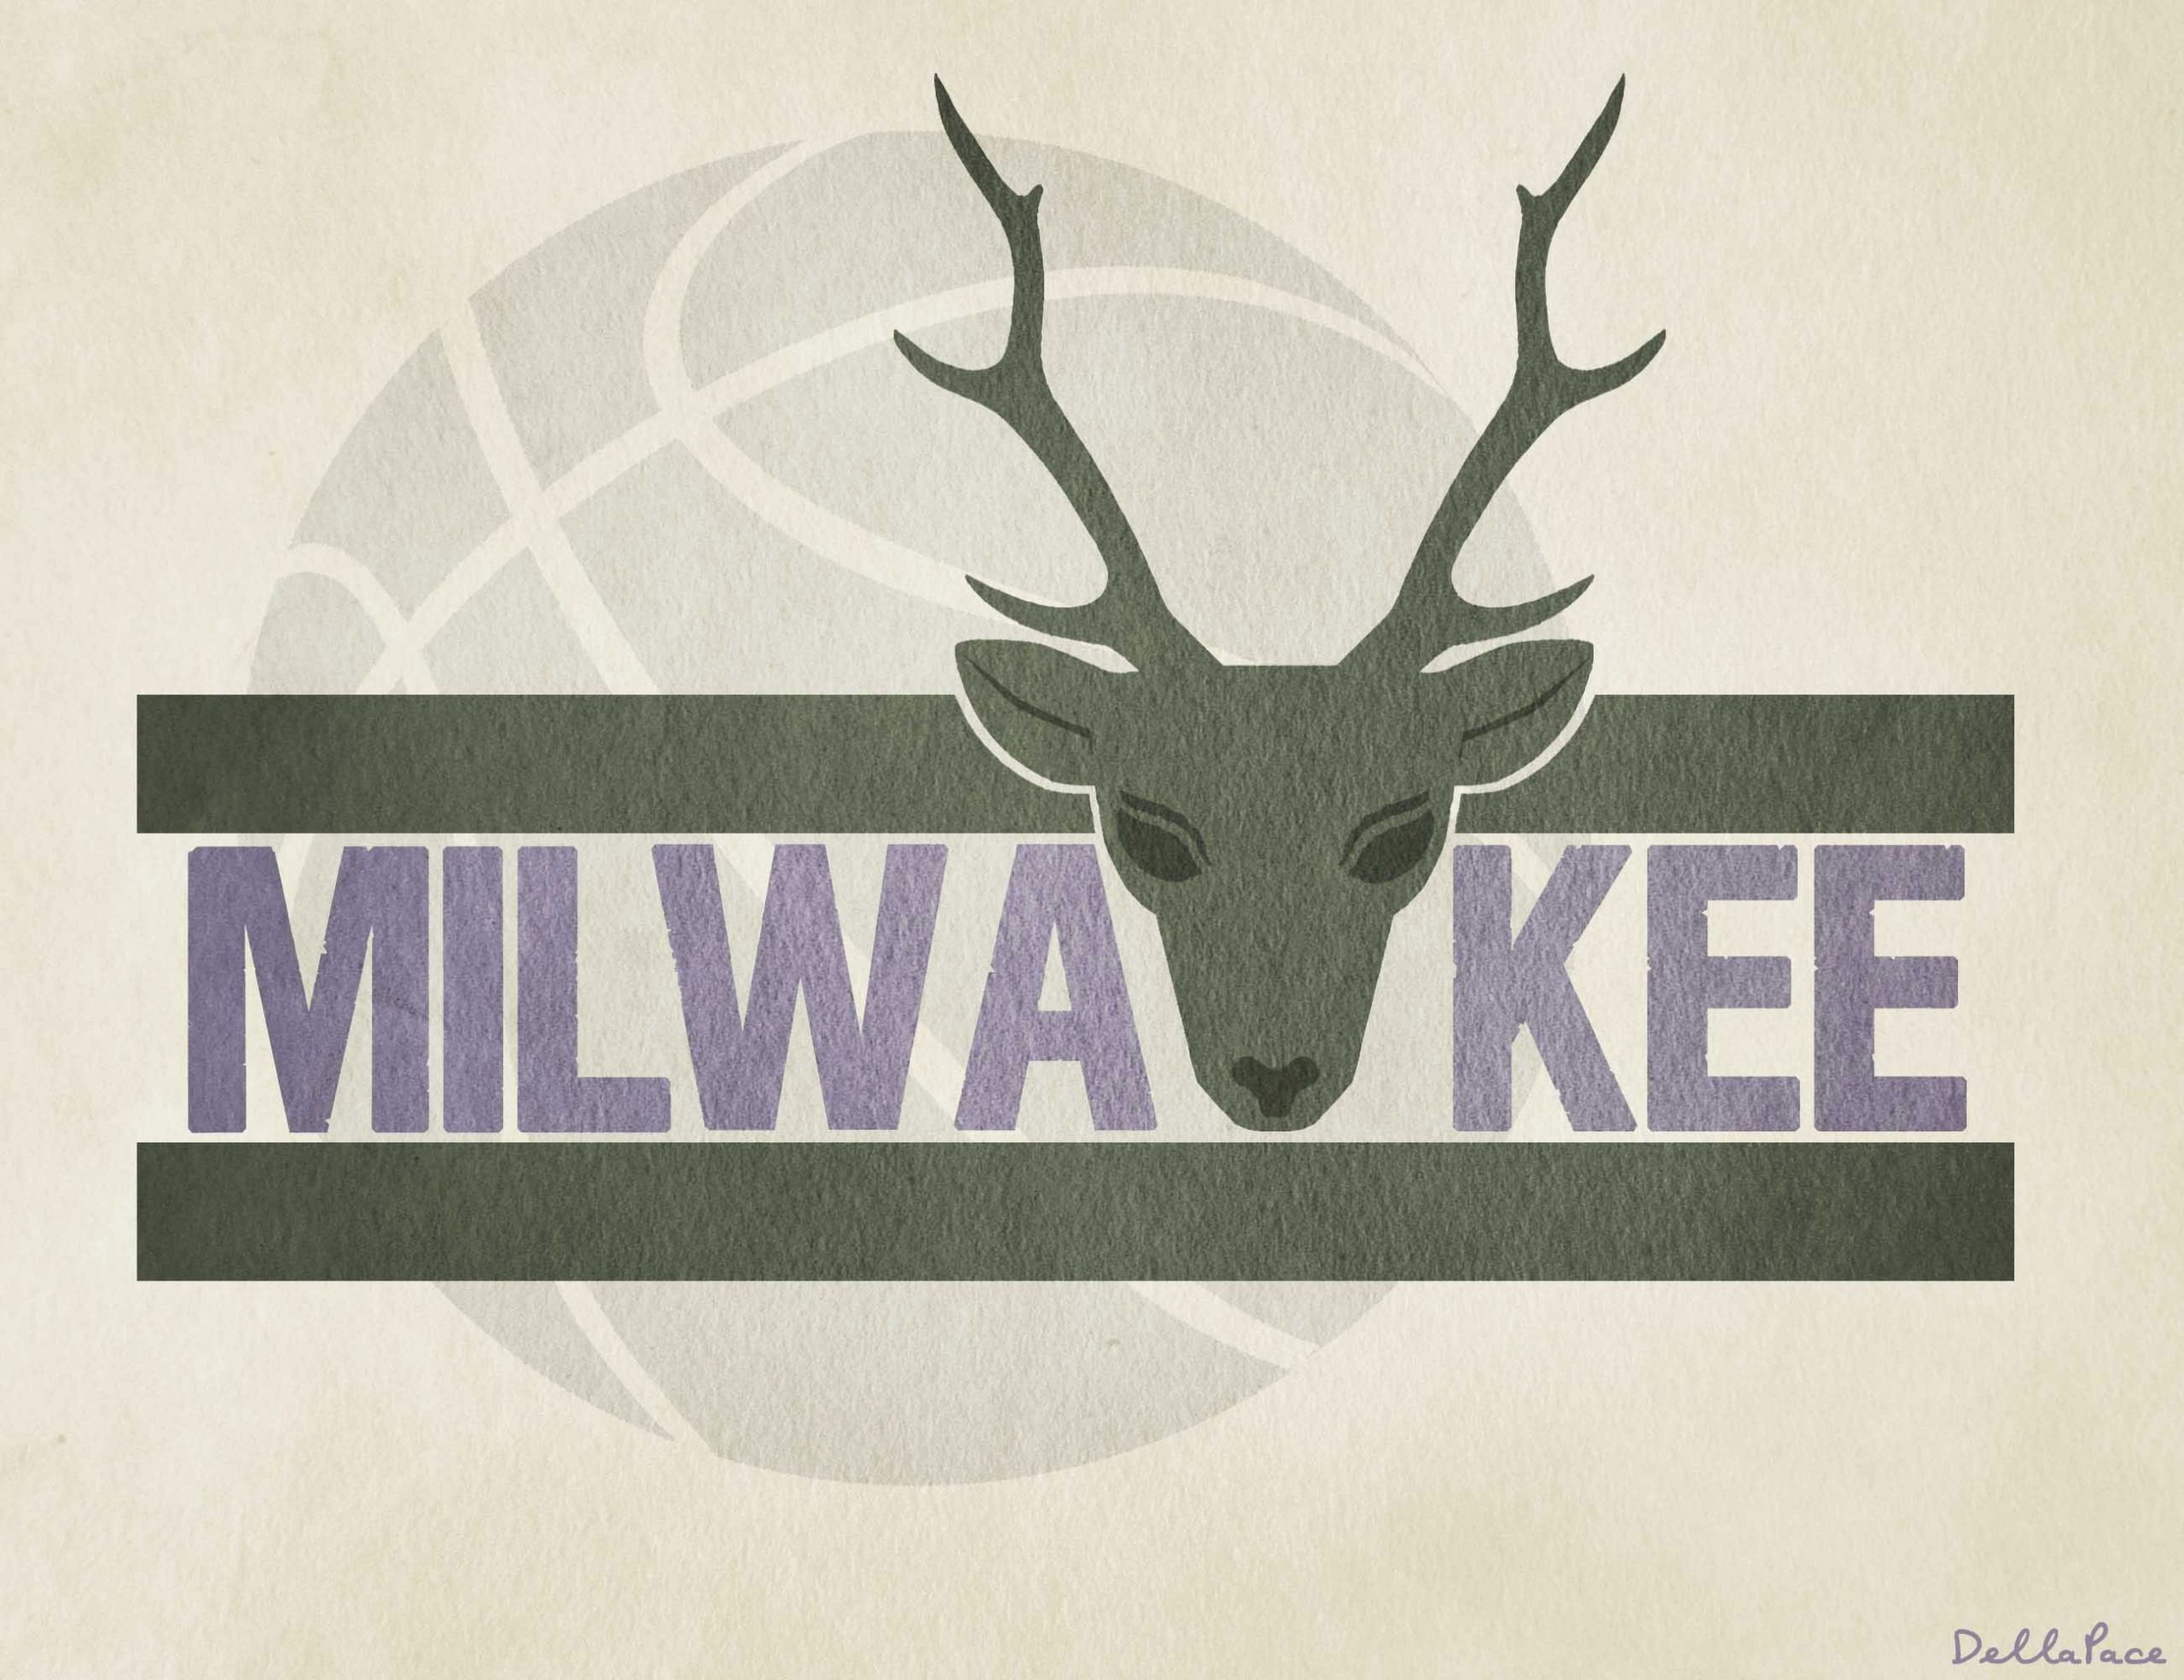 Wallpaper Basketball, Bucks, Milwaukee, Nba